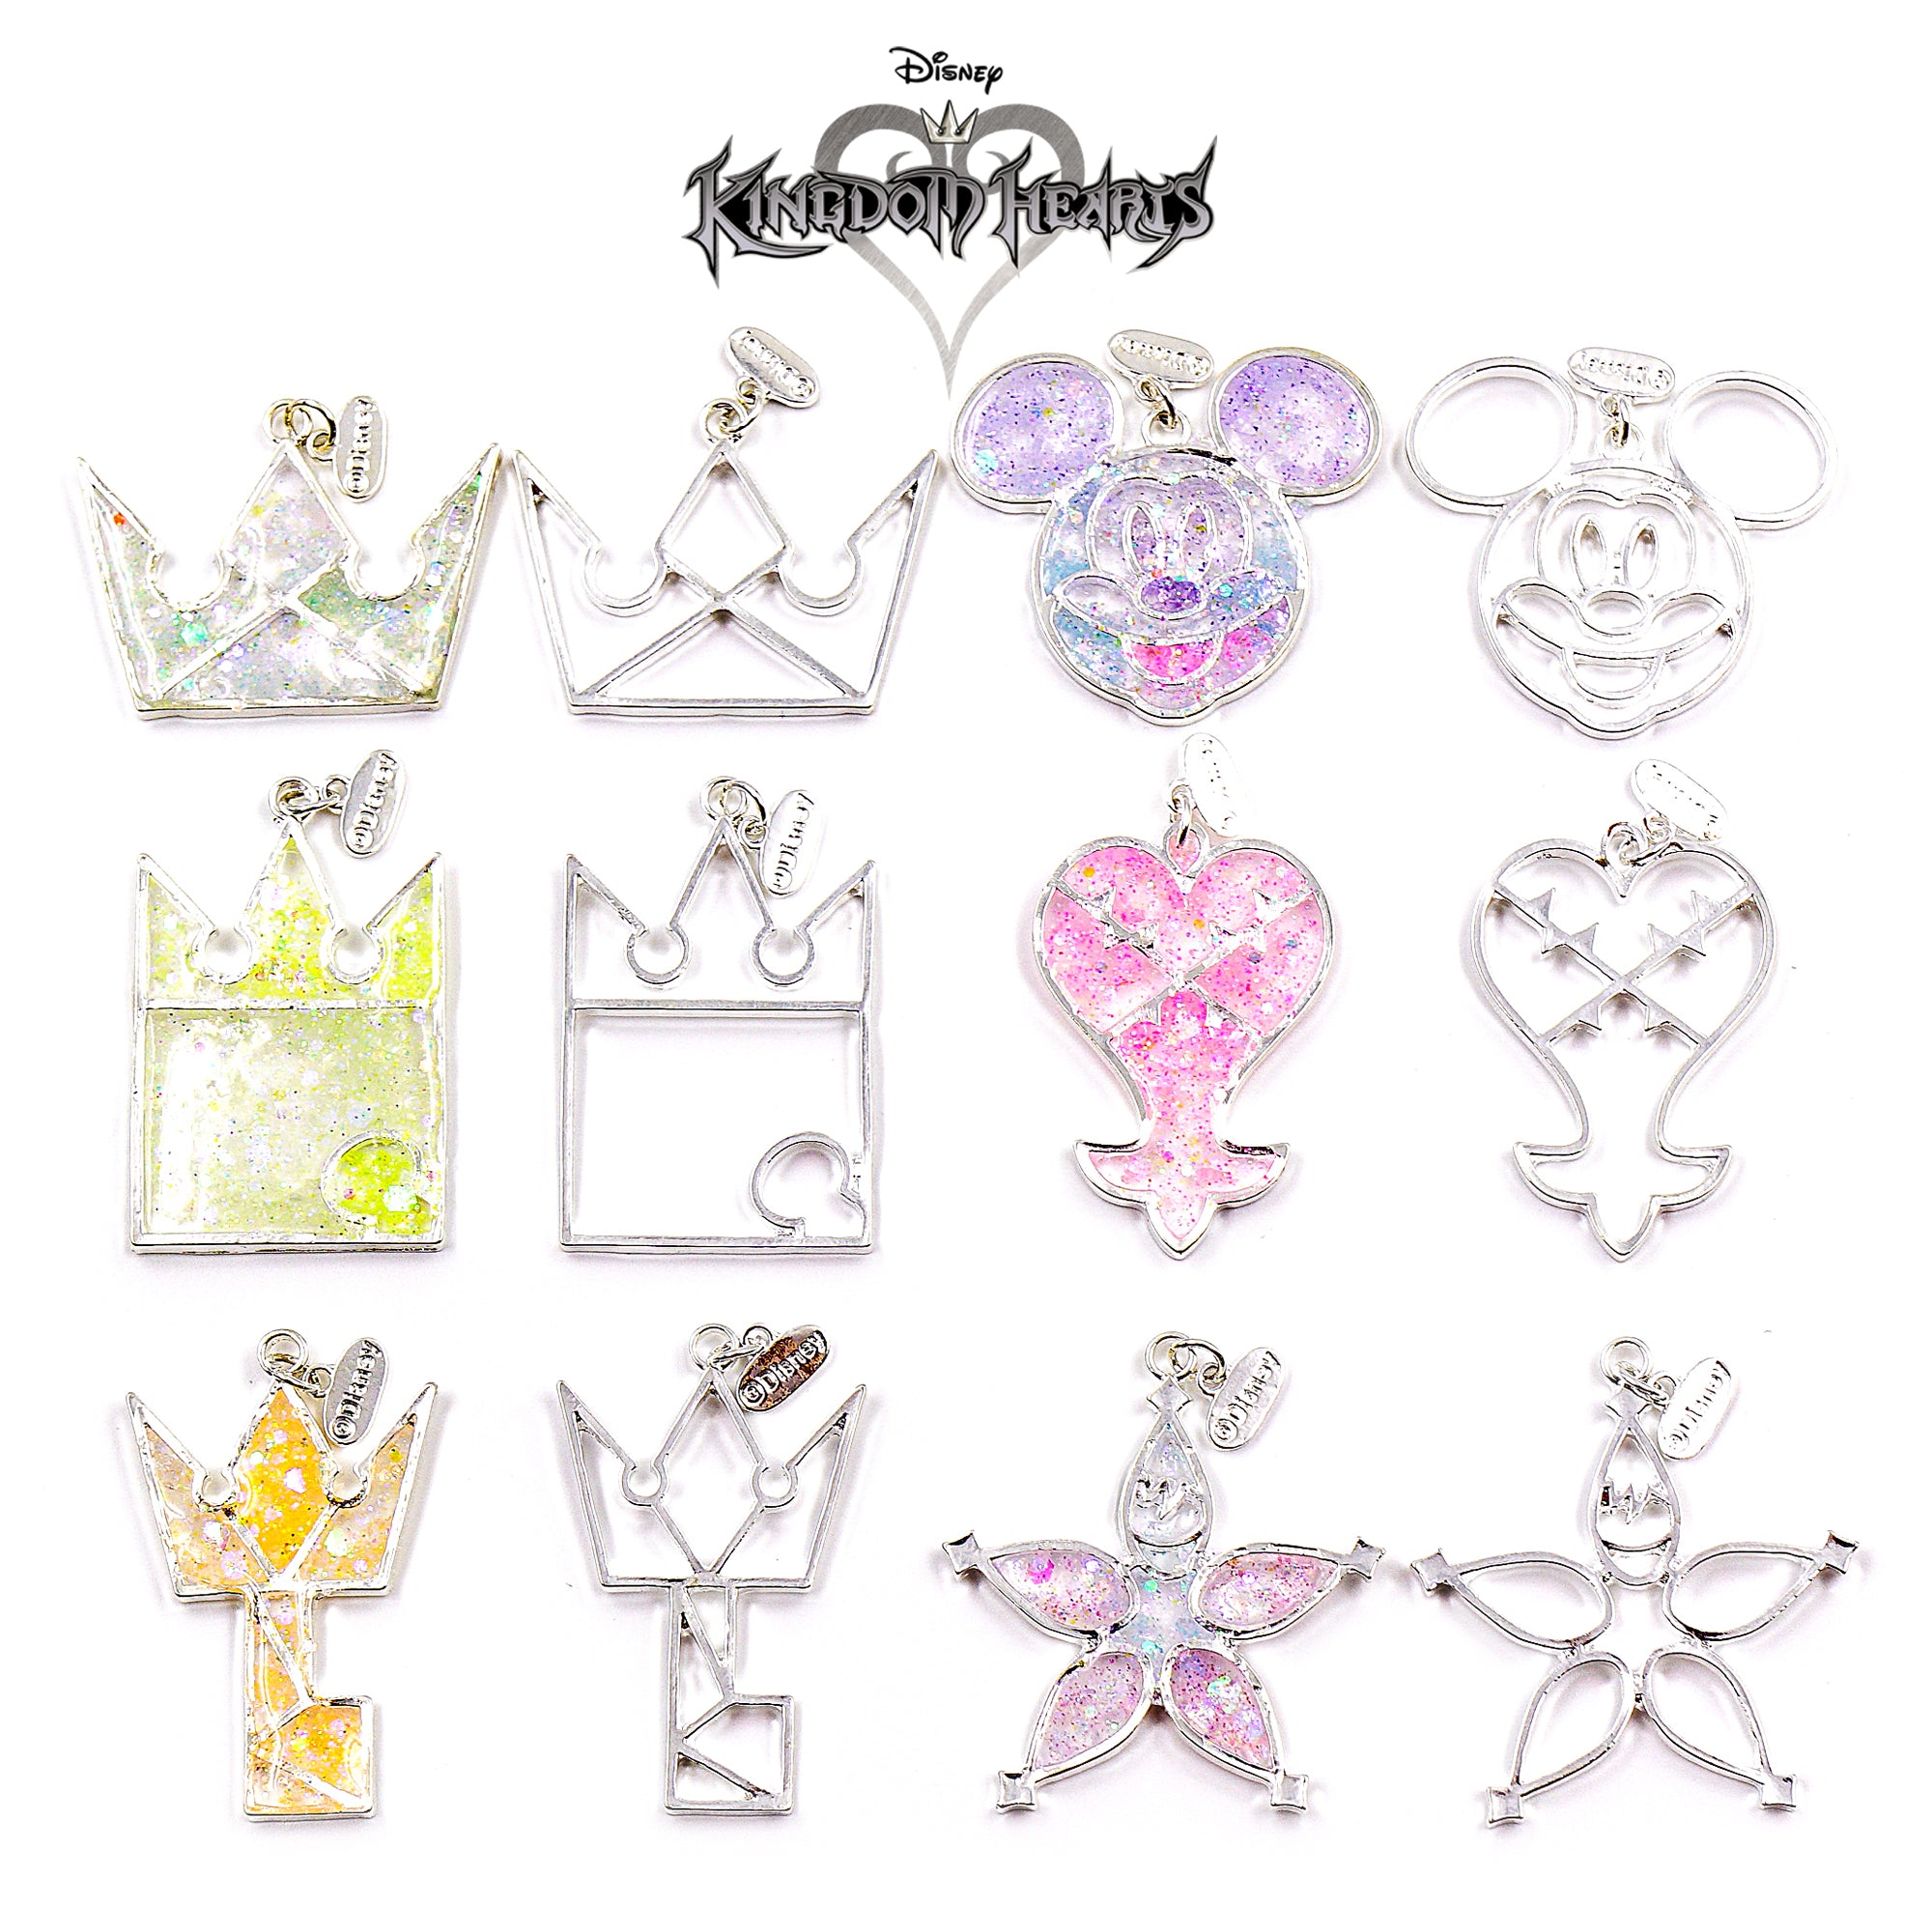 Disney Kingdom Hearts Silver Open Bezel Charms (12 pieces)